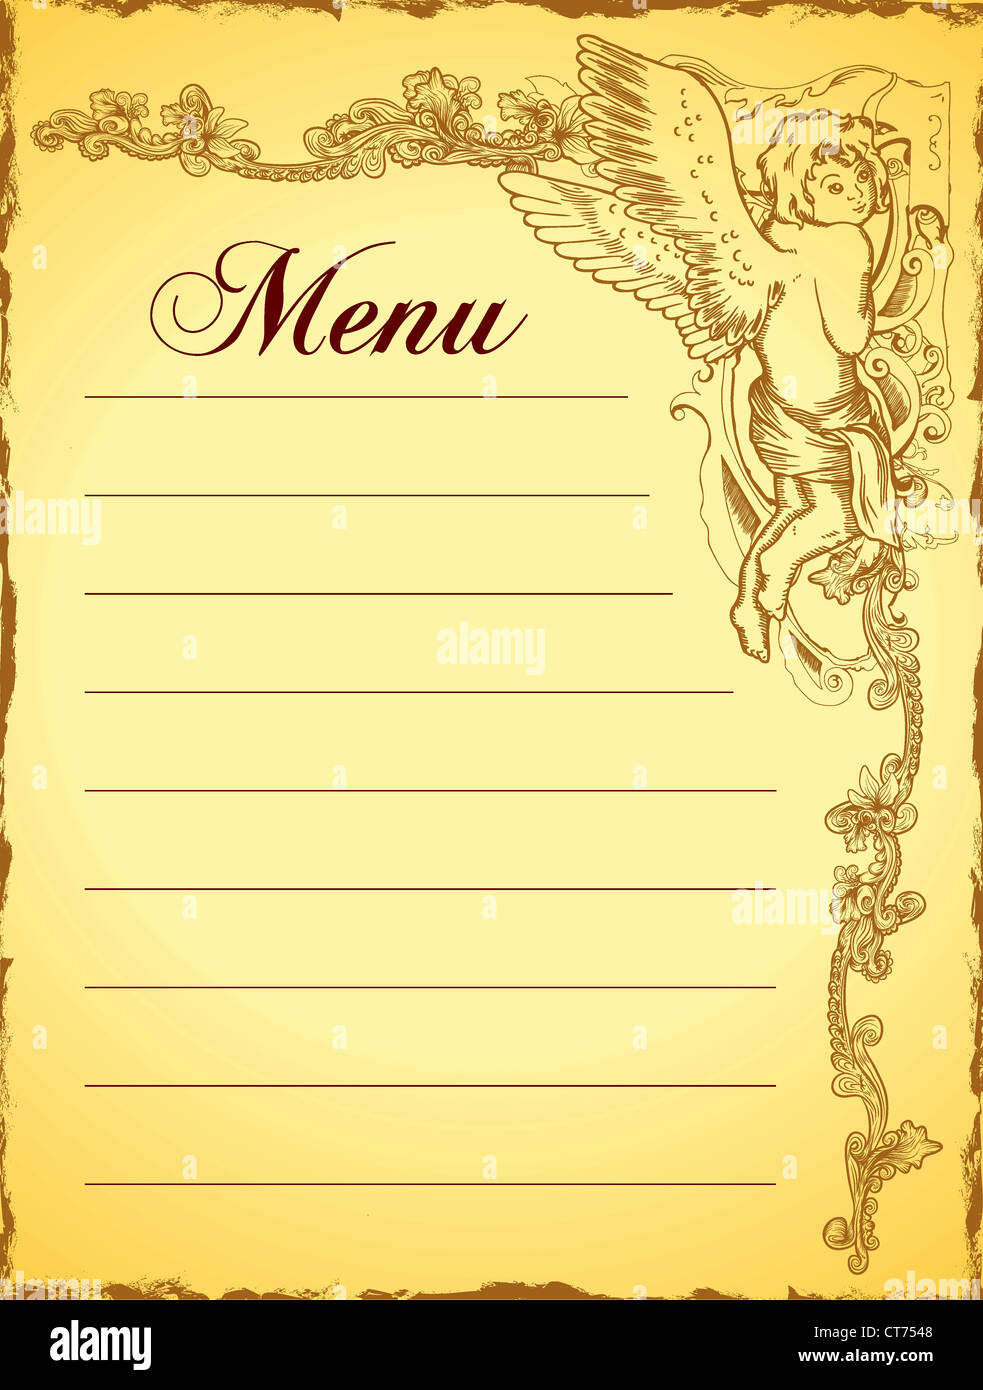 vector vintage restaurant menu Stock Photo